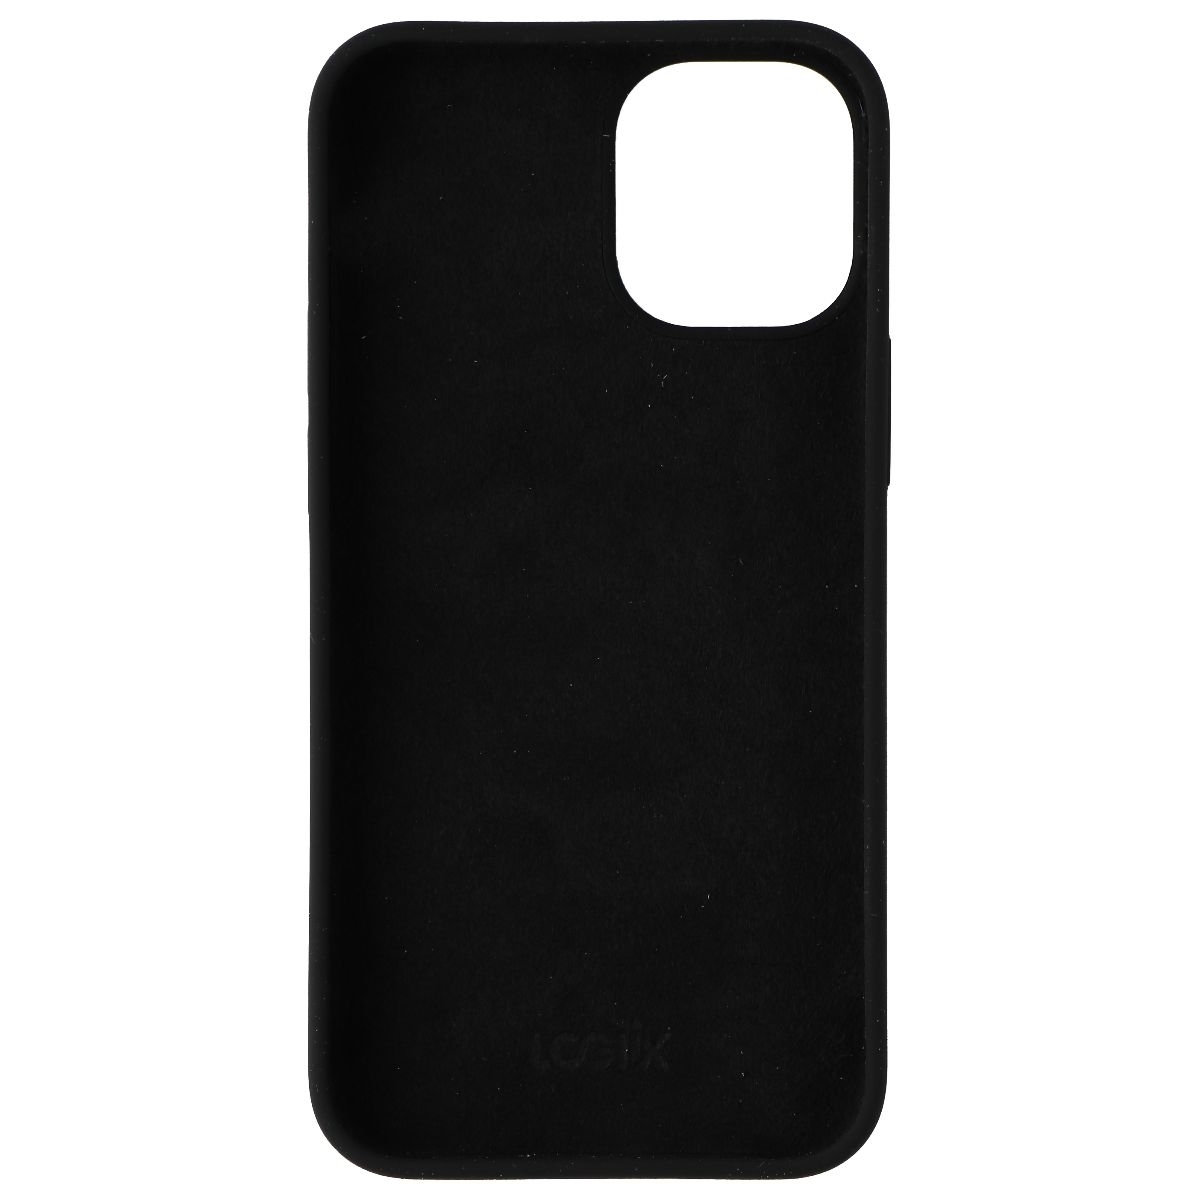 LOGiiX Vibrance Silicone Series Case For Apple IPhone 12 Mini - Black (Refurbished)